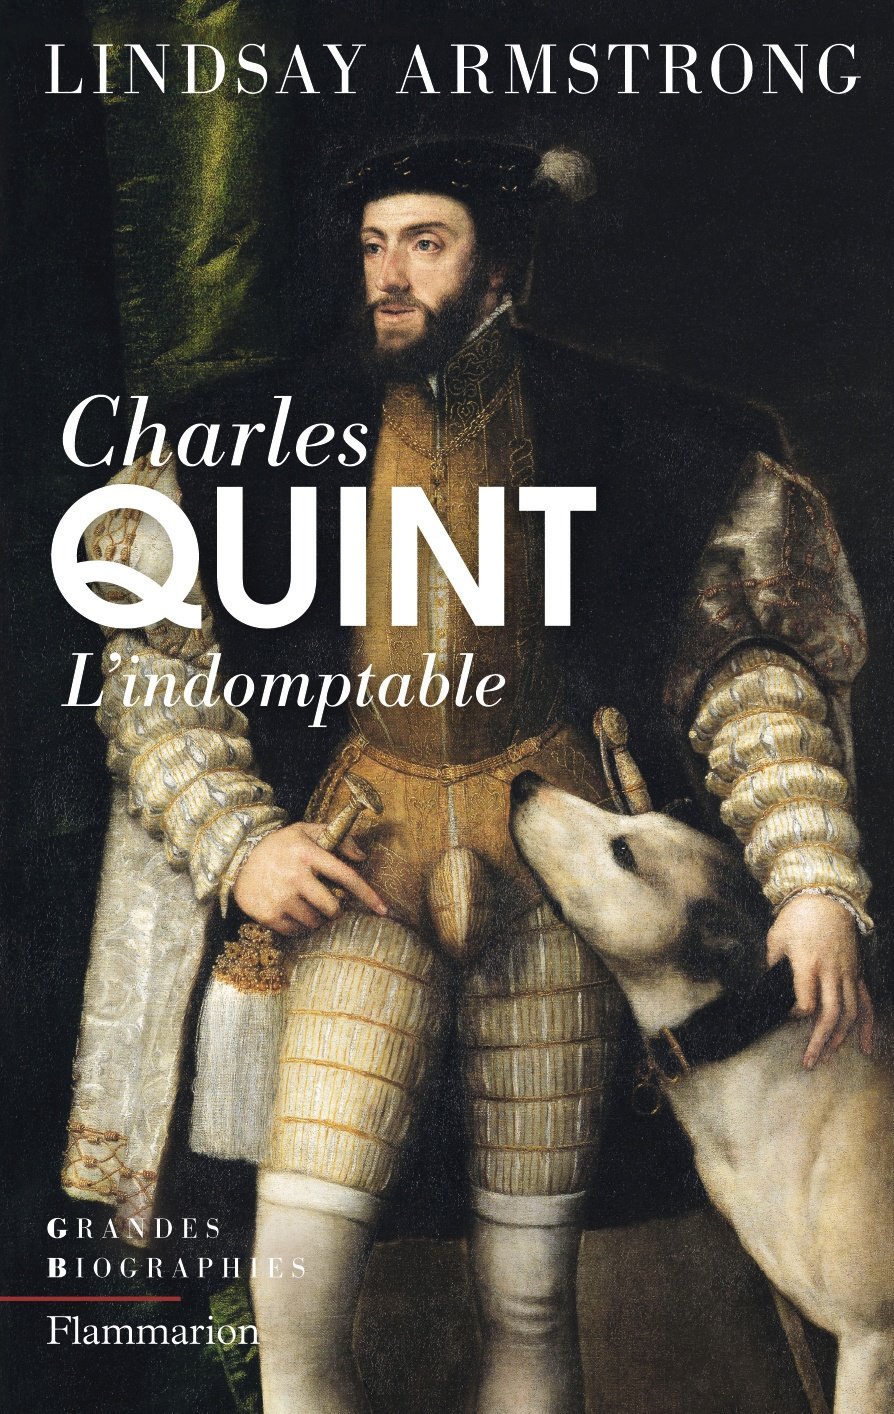 Charles Quint, L'indomptable, 2014.